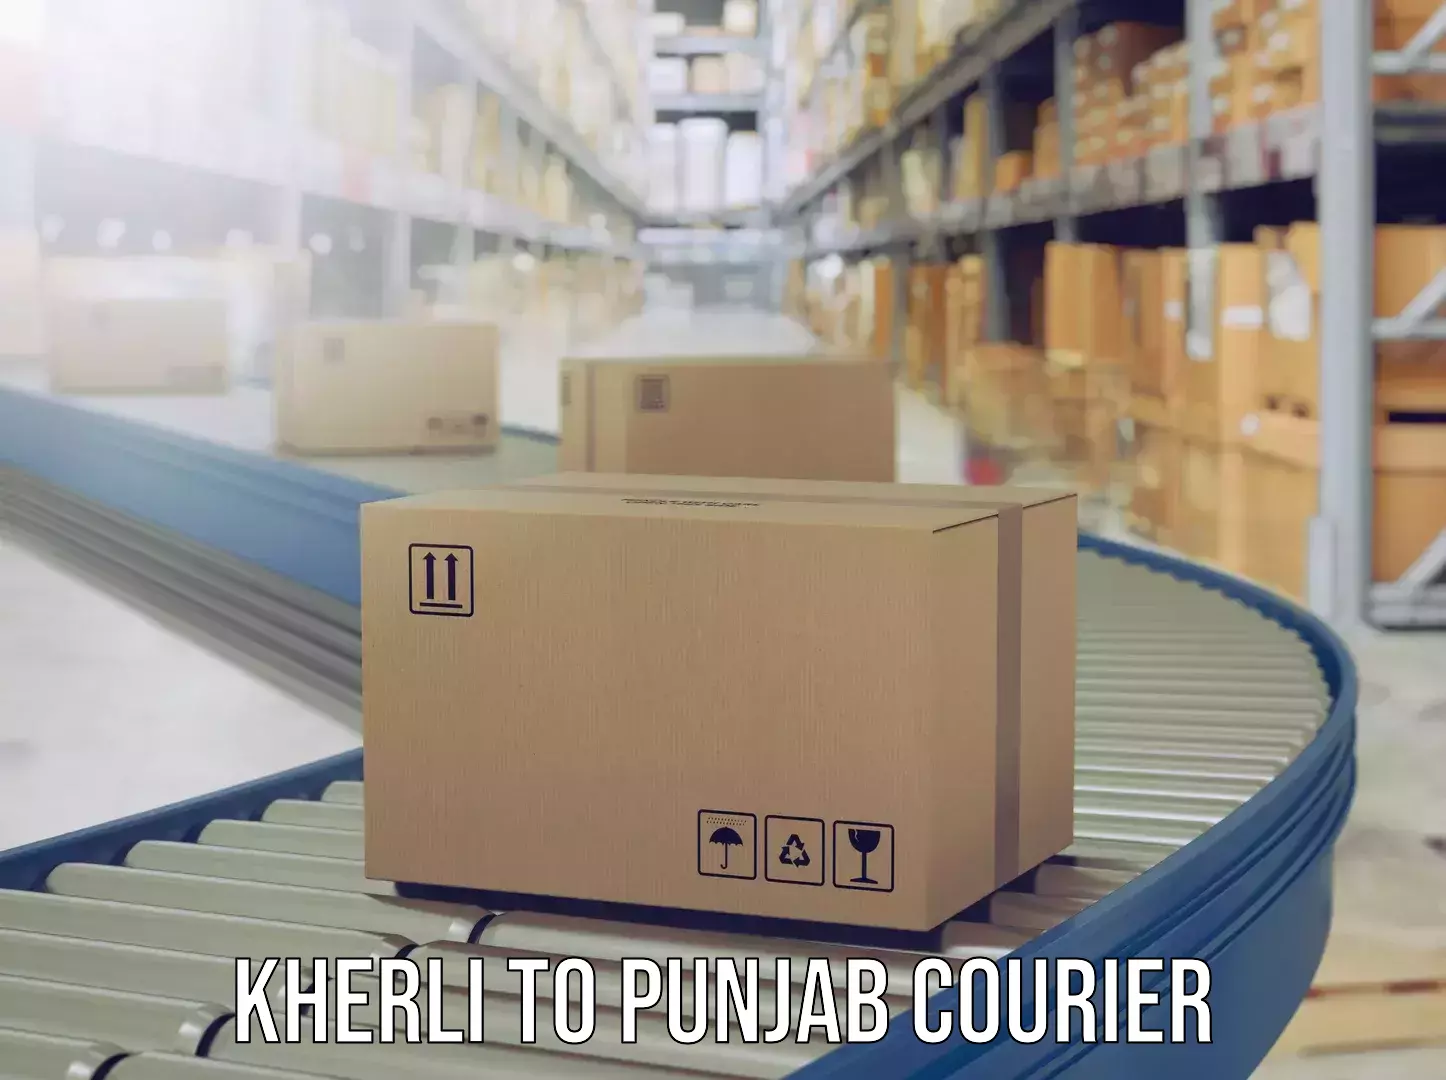 Instant baggage transport quote Kherli to Punjab